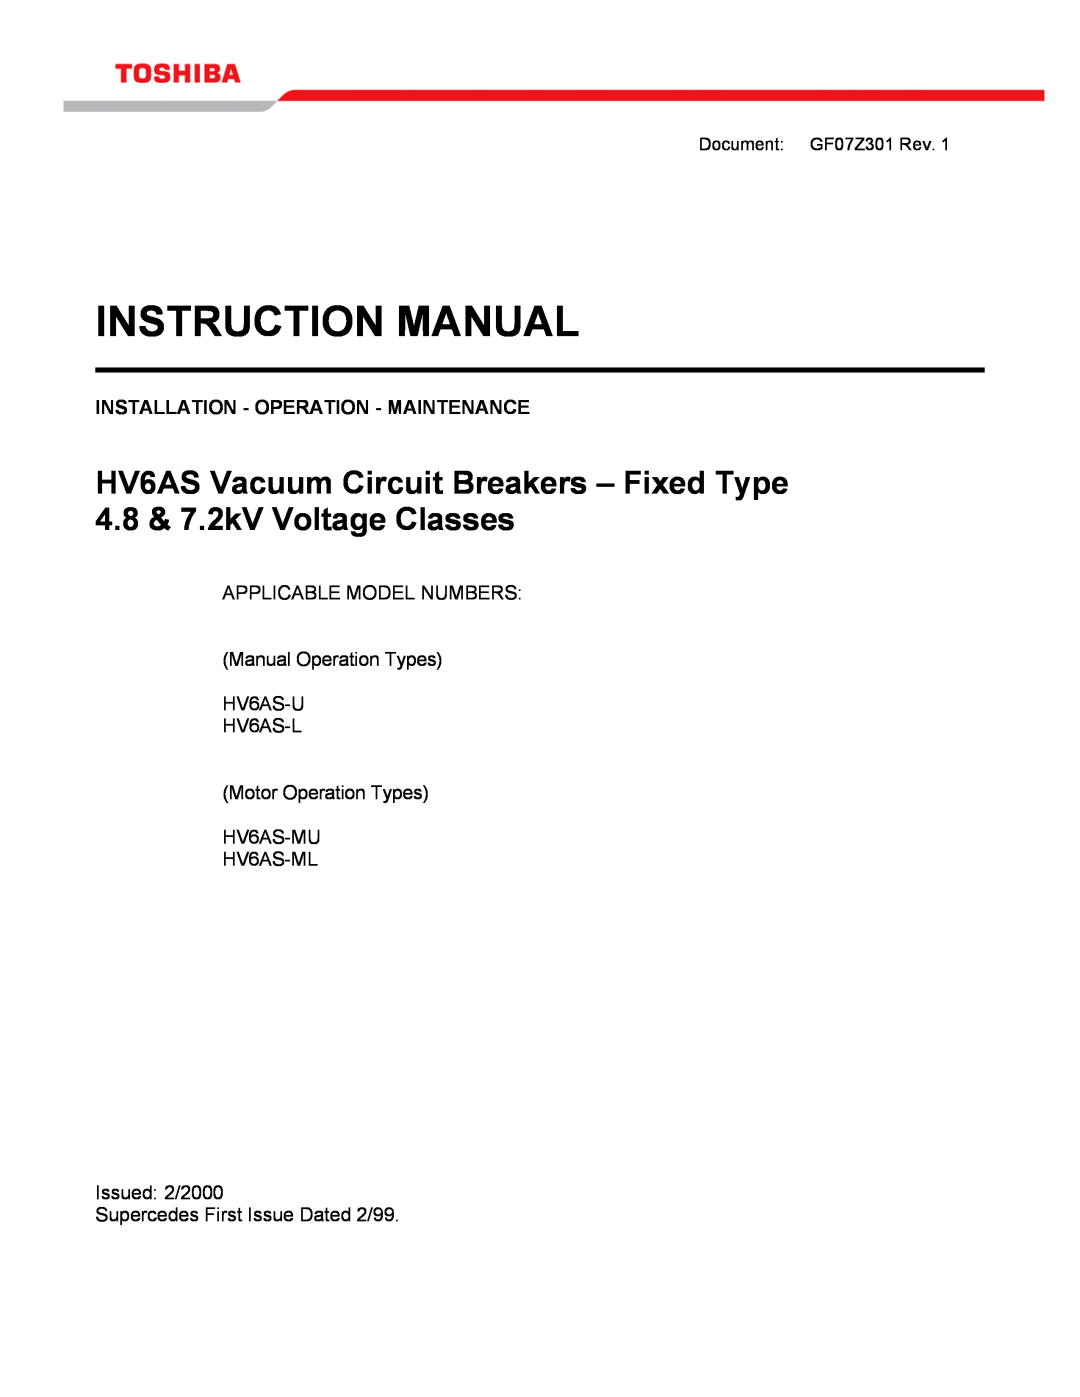 Toshiba HV6AS instruction manual Installation - Operation - Maintenance 